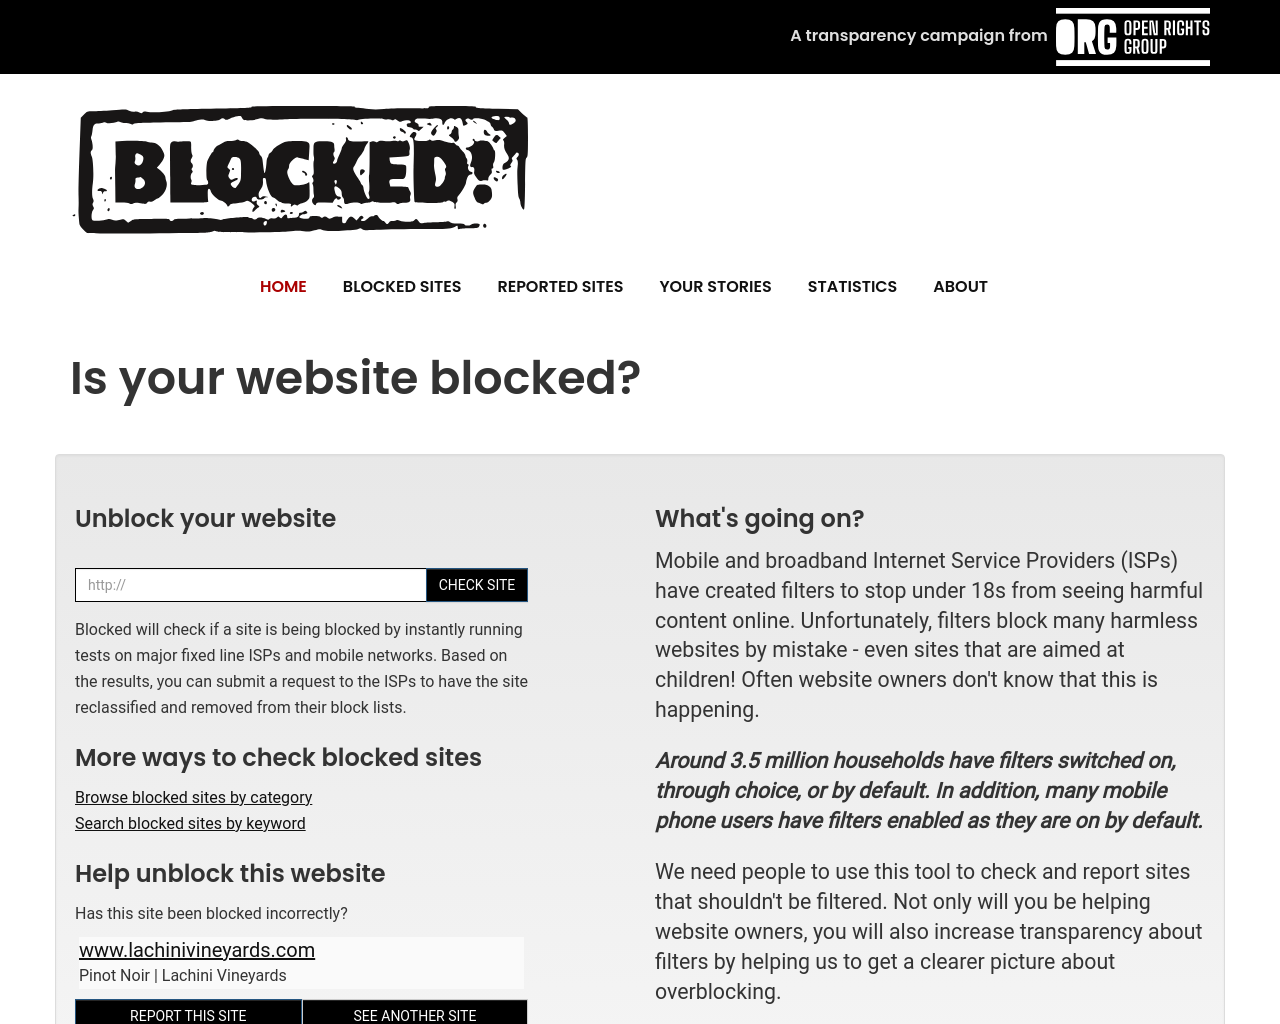 blocked.org.uk